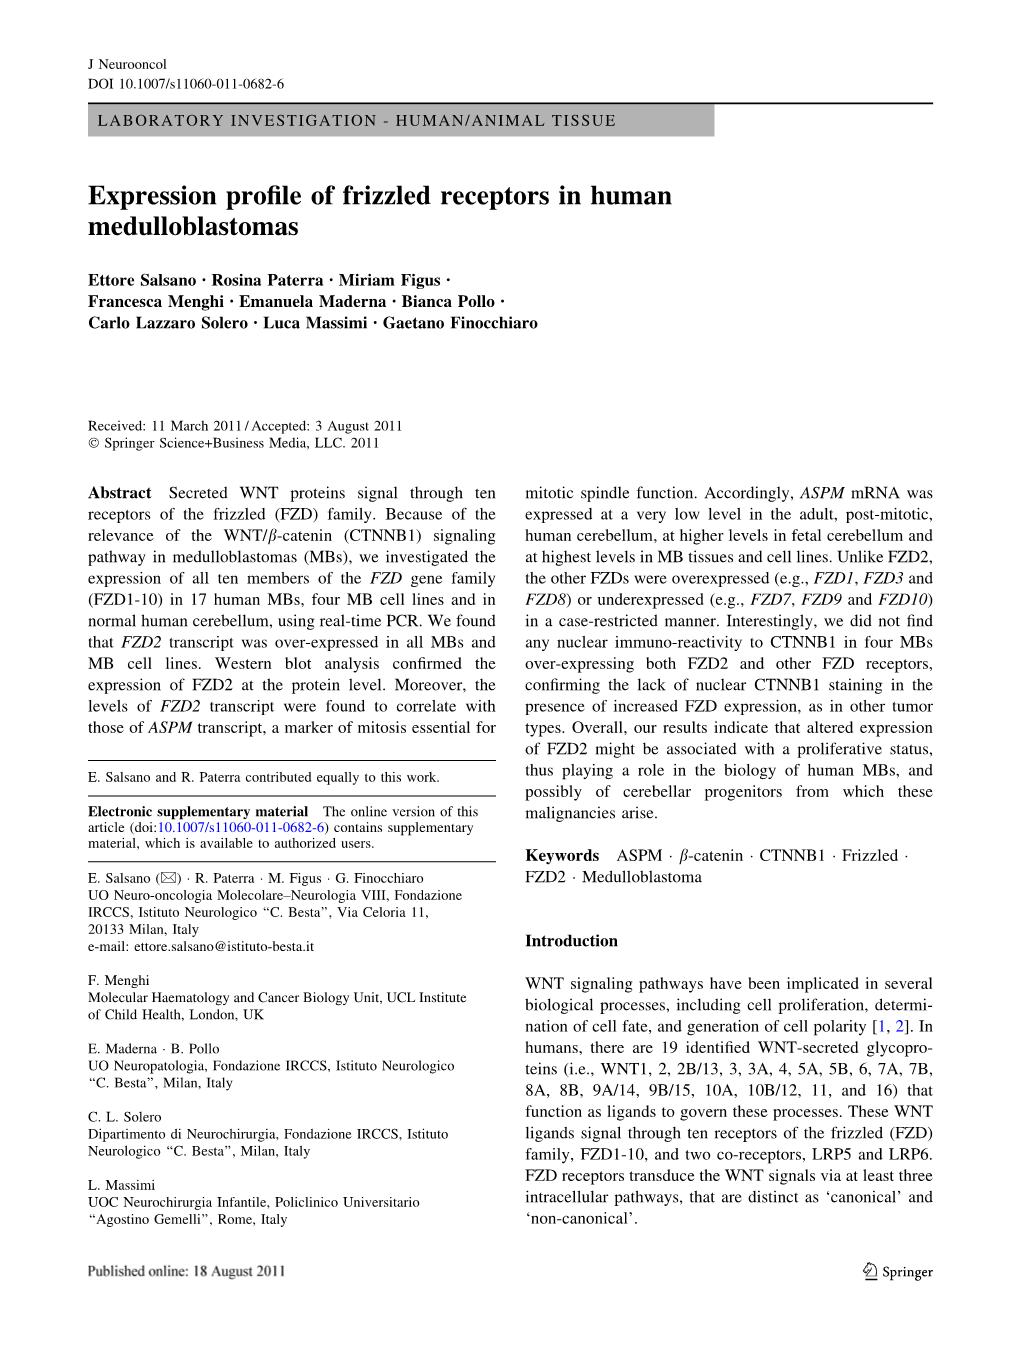 Expression Profile of Frizzled Receptors in Human Medulloblastomas